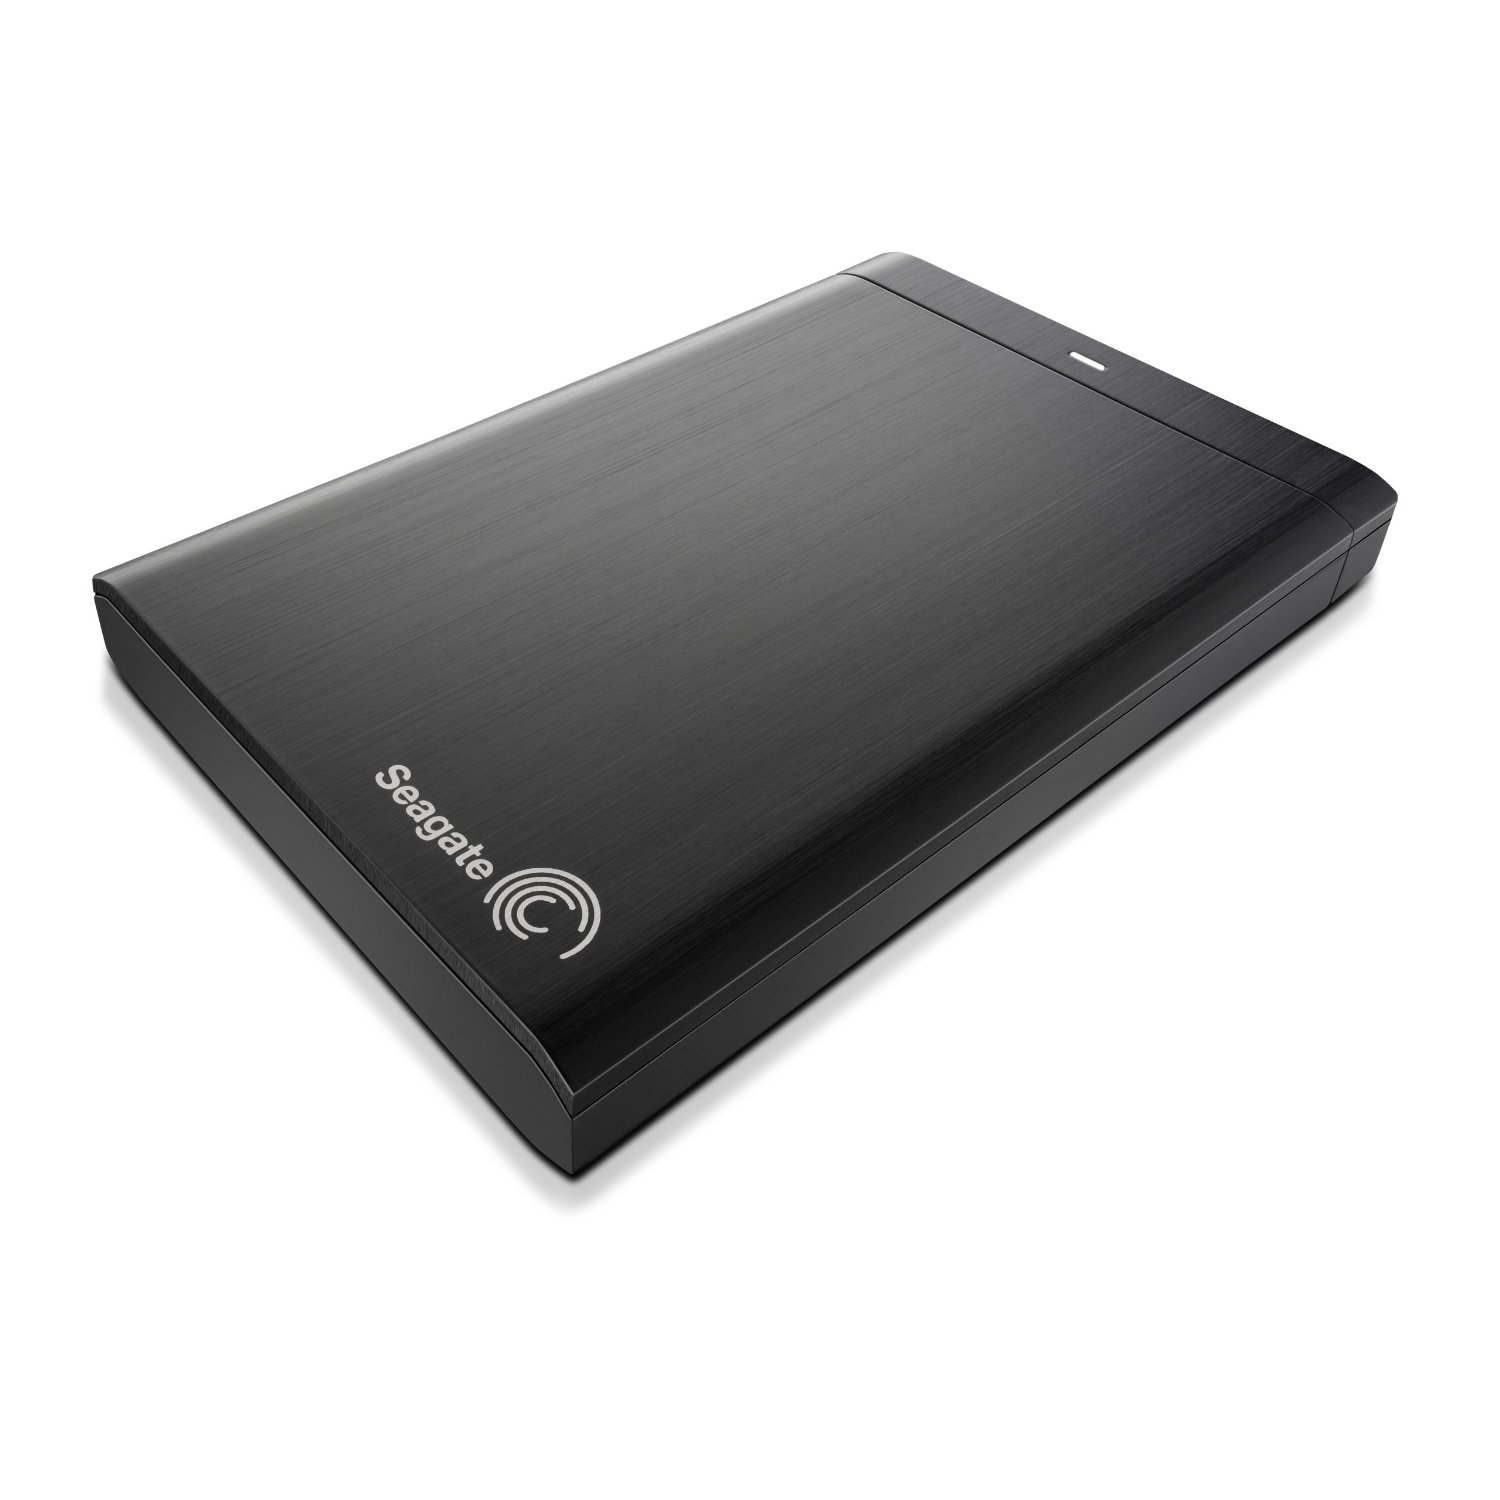 Seagate Backup Plus 1 Terabyte Portable Hard Drive For 109